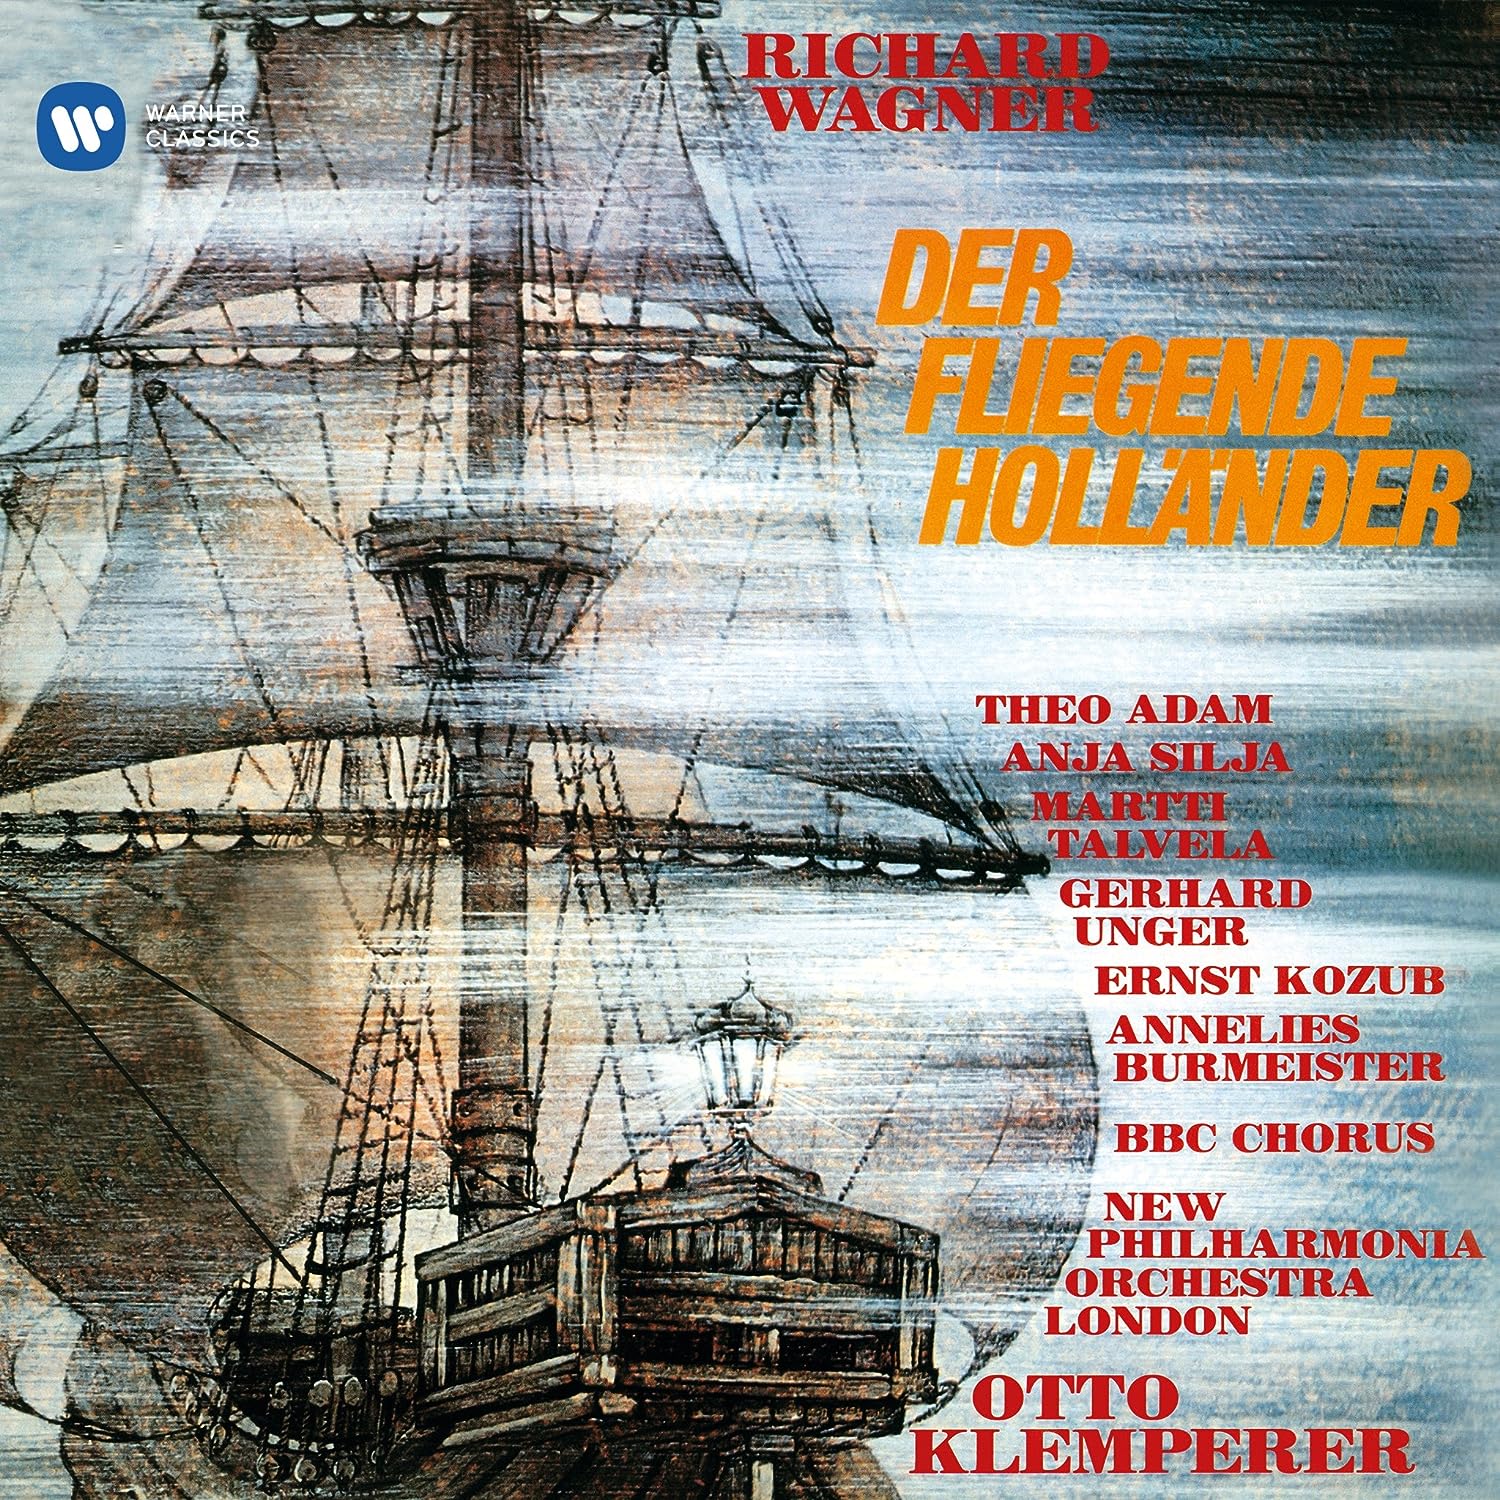 Richard Wagner: Der Fliegende Hollander | Theo Adam, Anja Silja, Martti Talvela, Gerhard Unger, Ernst Kozub, BBC Chorus, New Philharmonia Orchestra London, Otto Klemperer